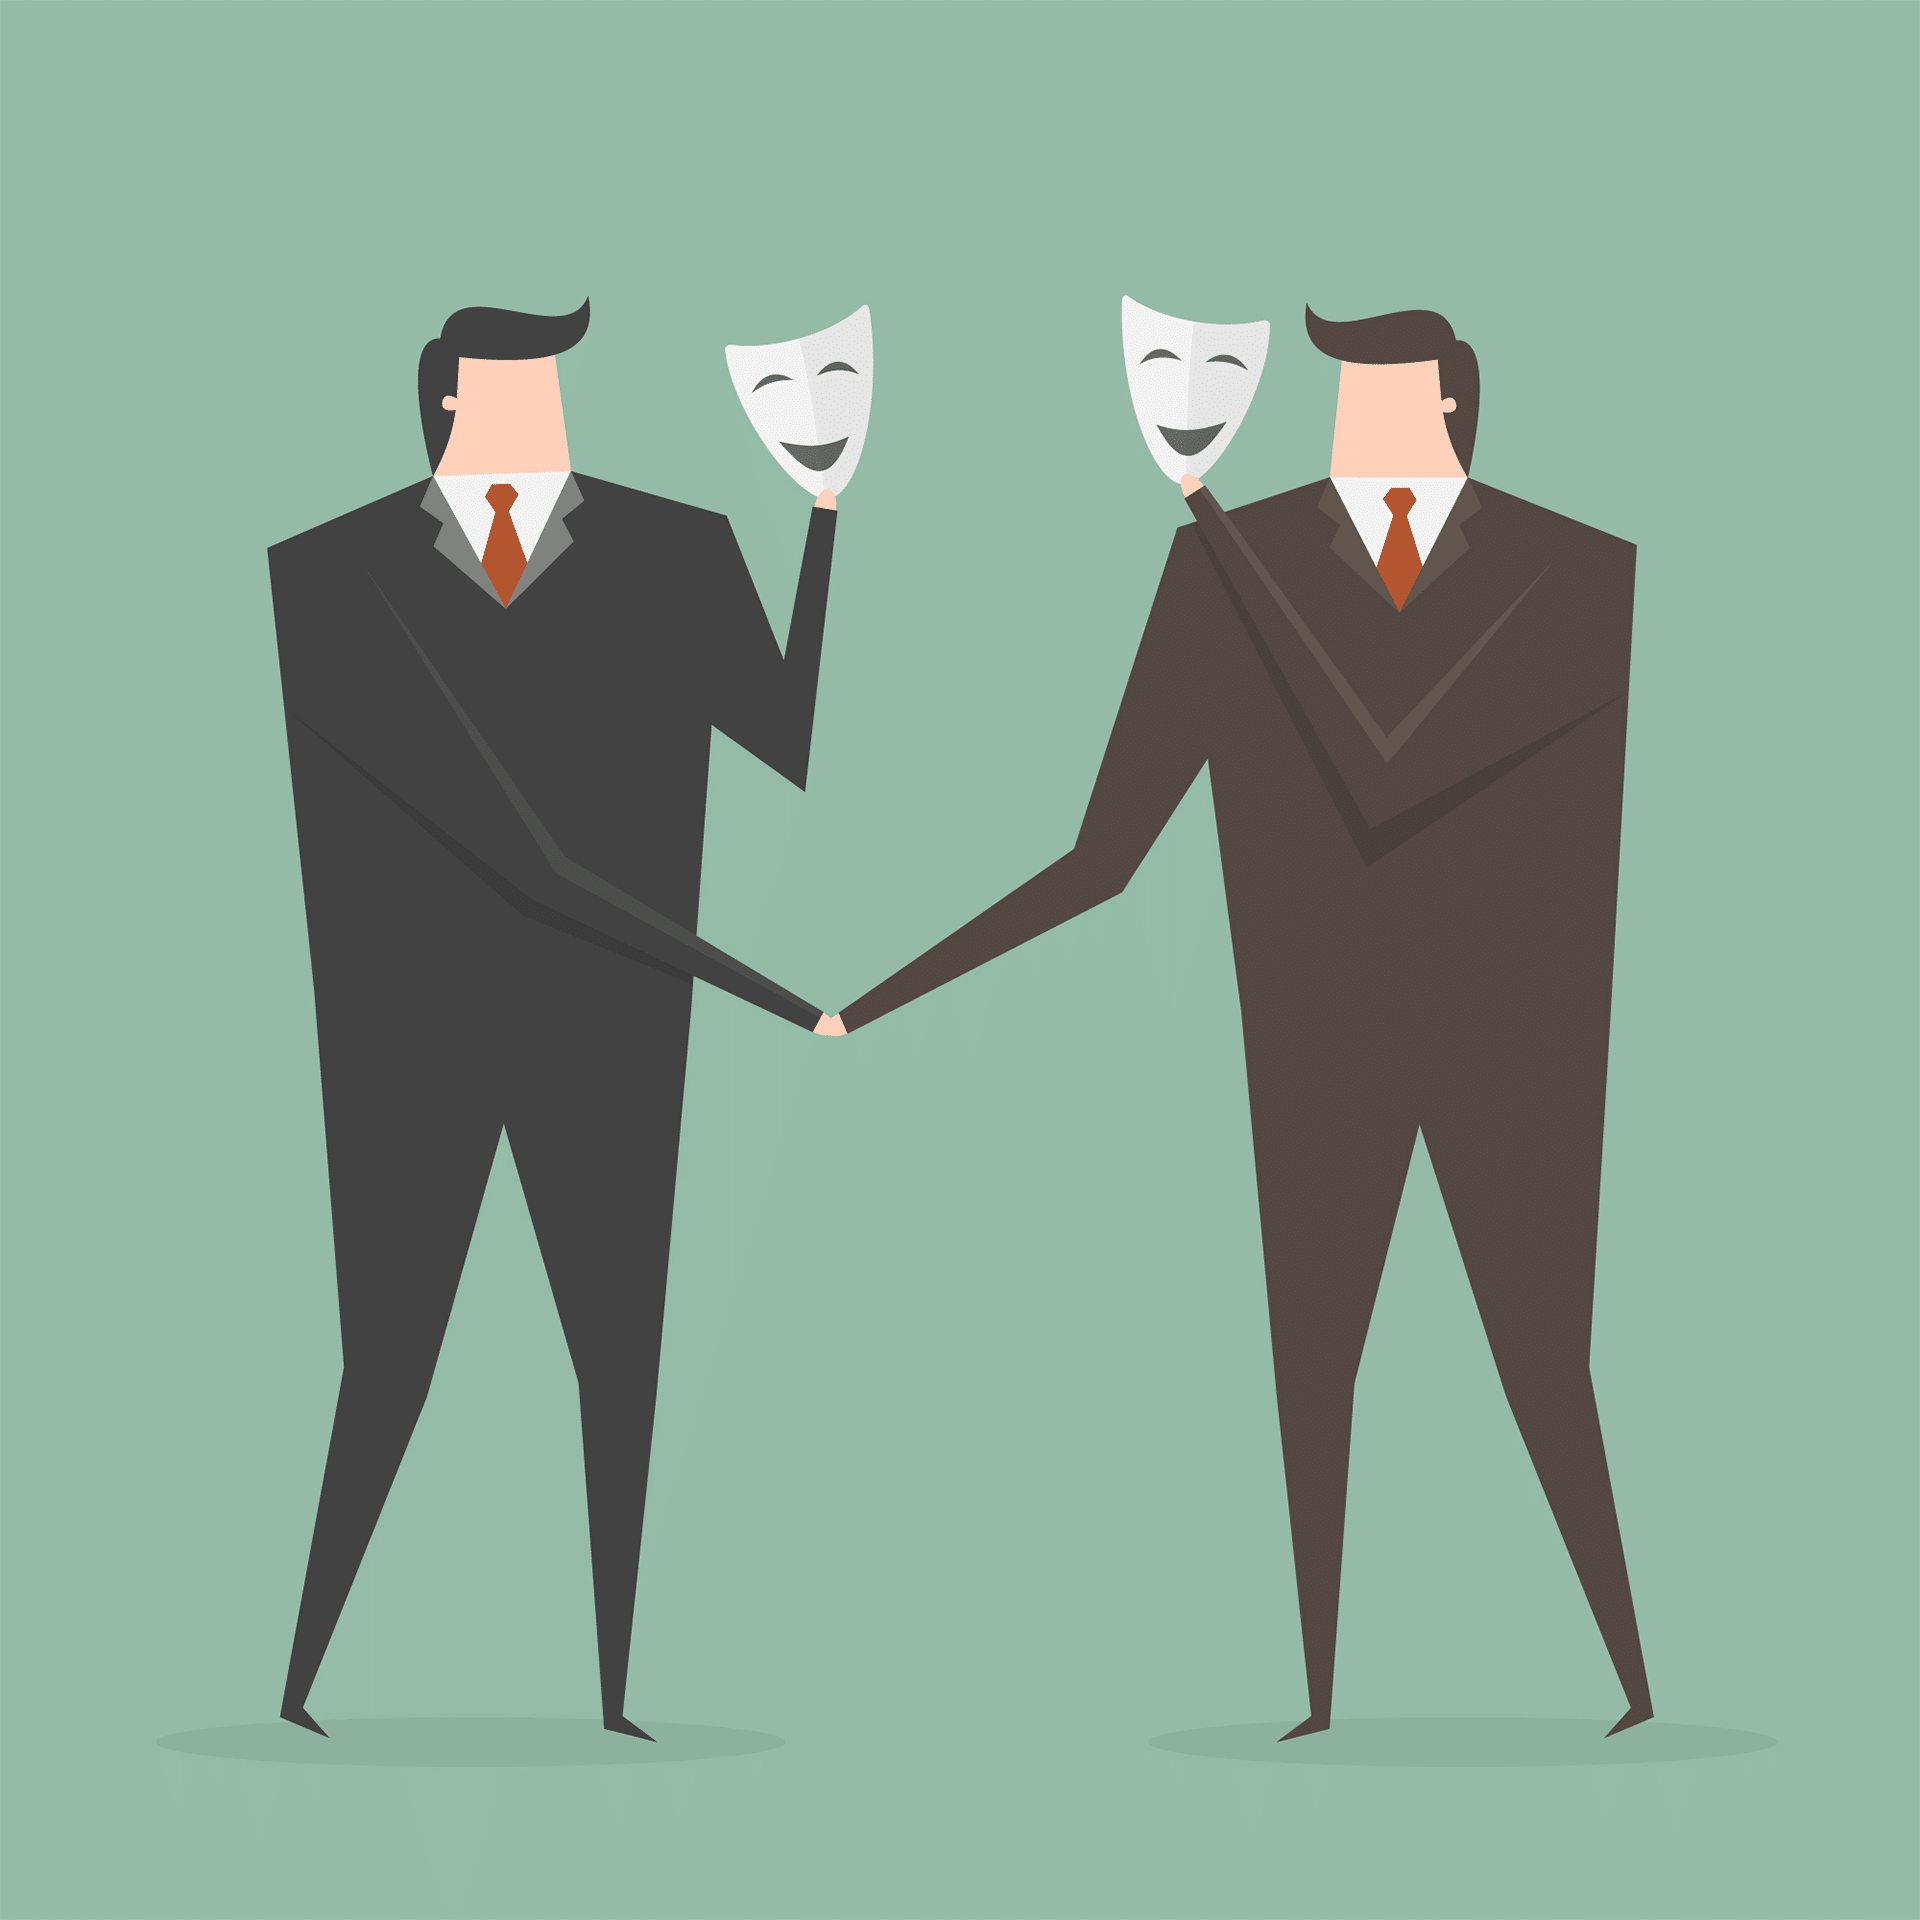 two identical men shake hands while holding drama masks